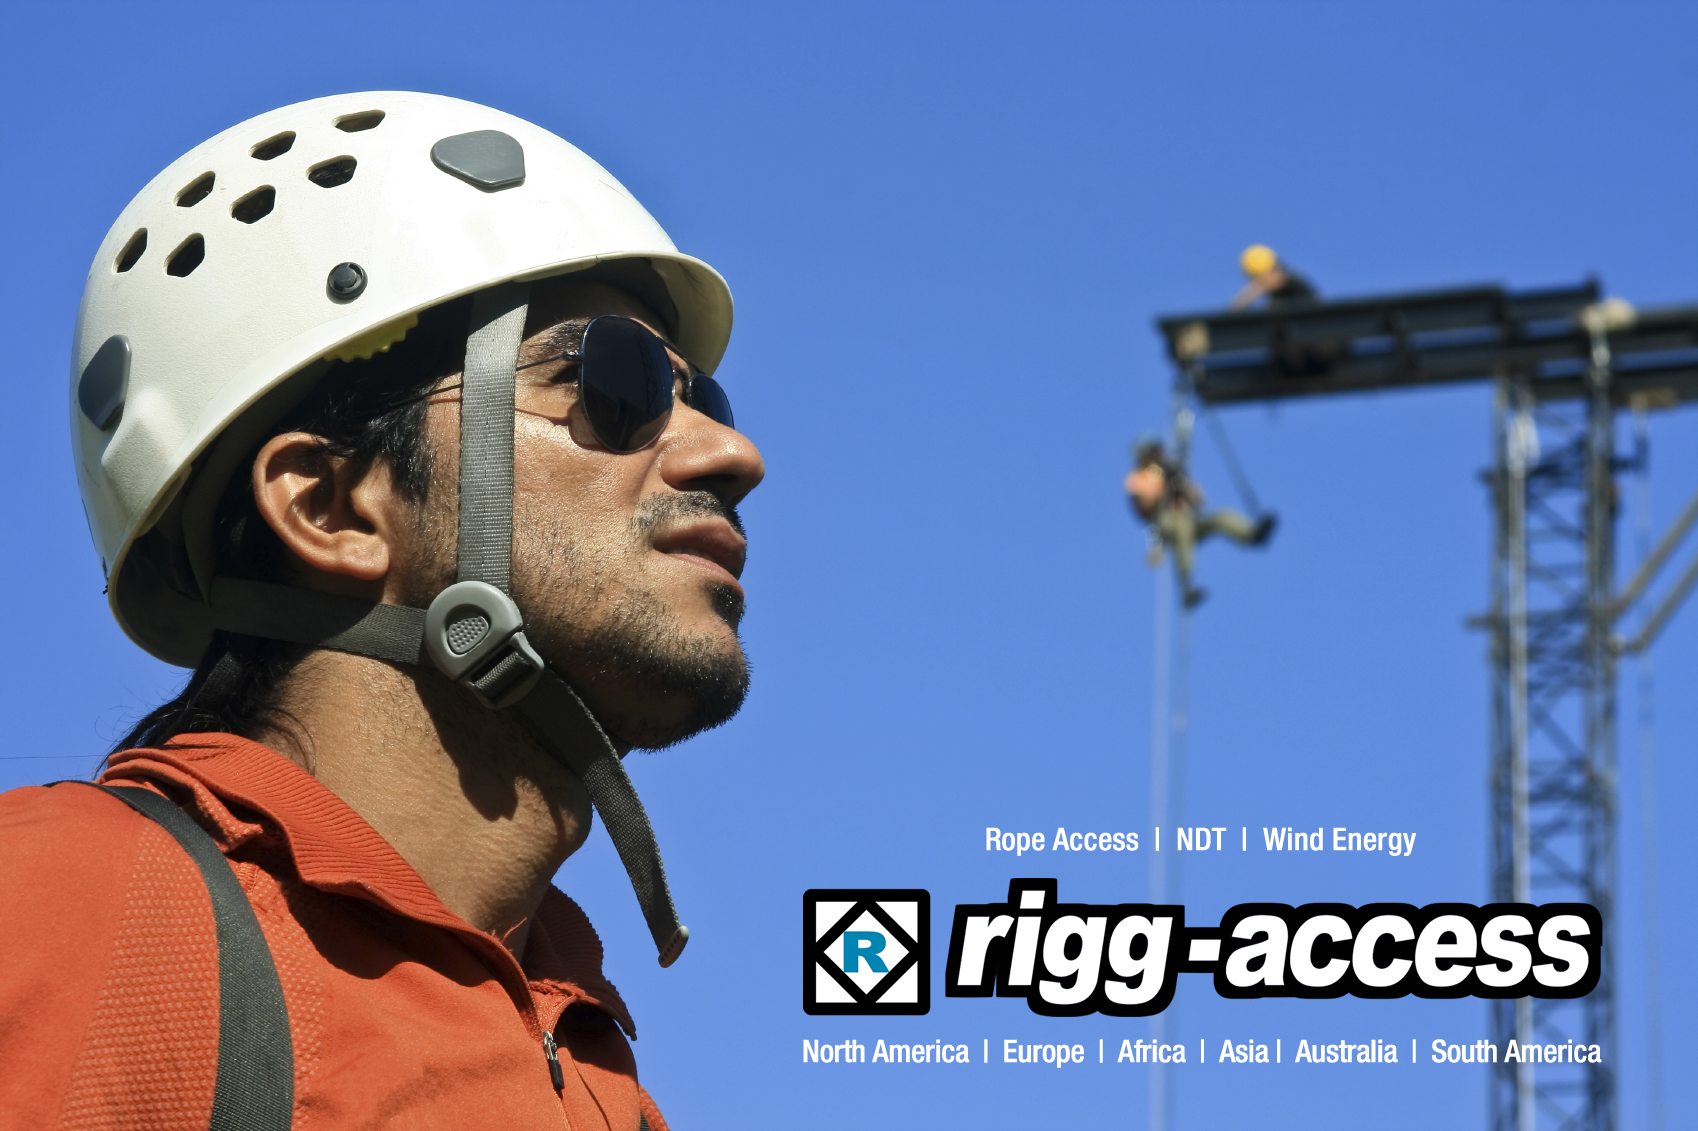 www.rigg-access.com